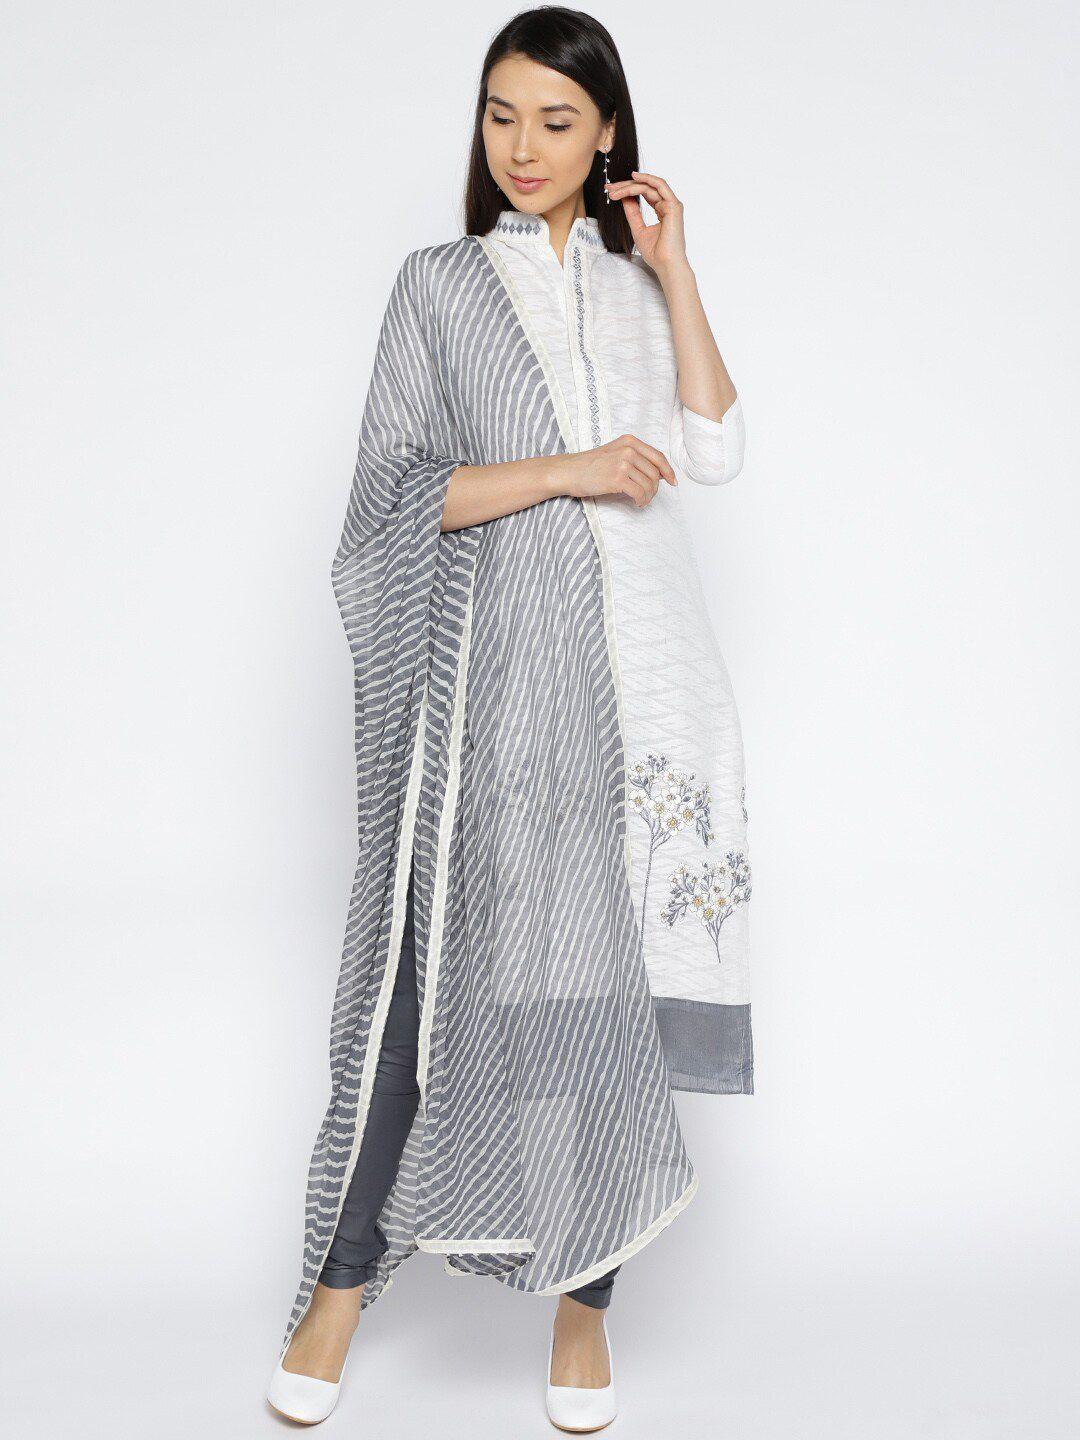 divastri ethnic motifs embroidered jacquard cotton unstitched dress material